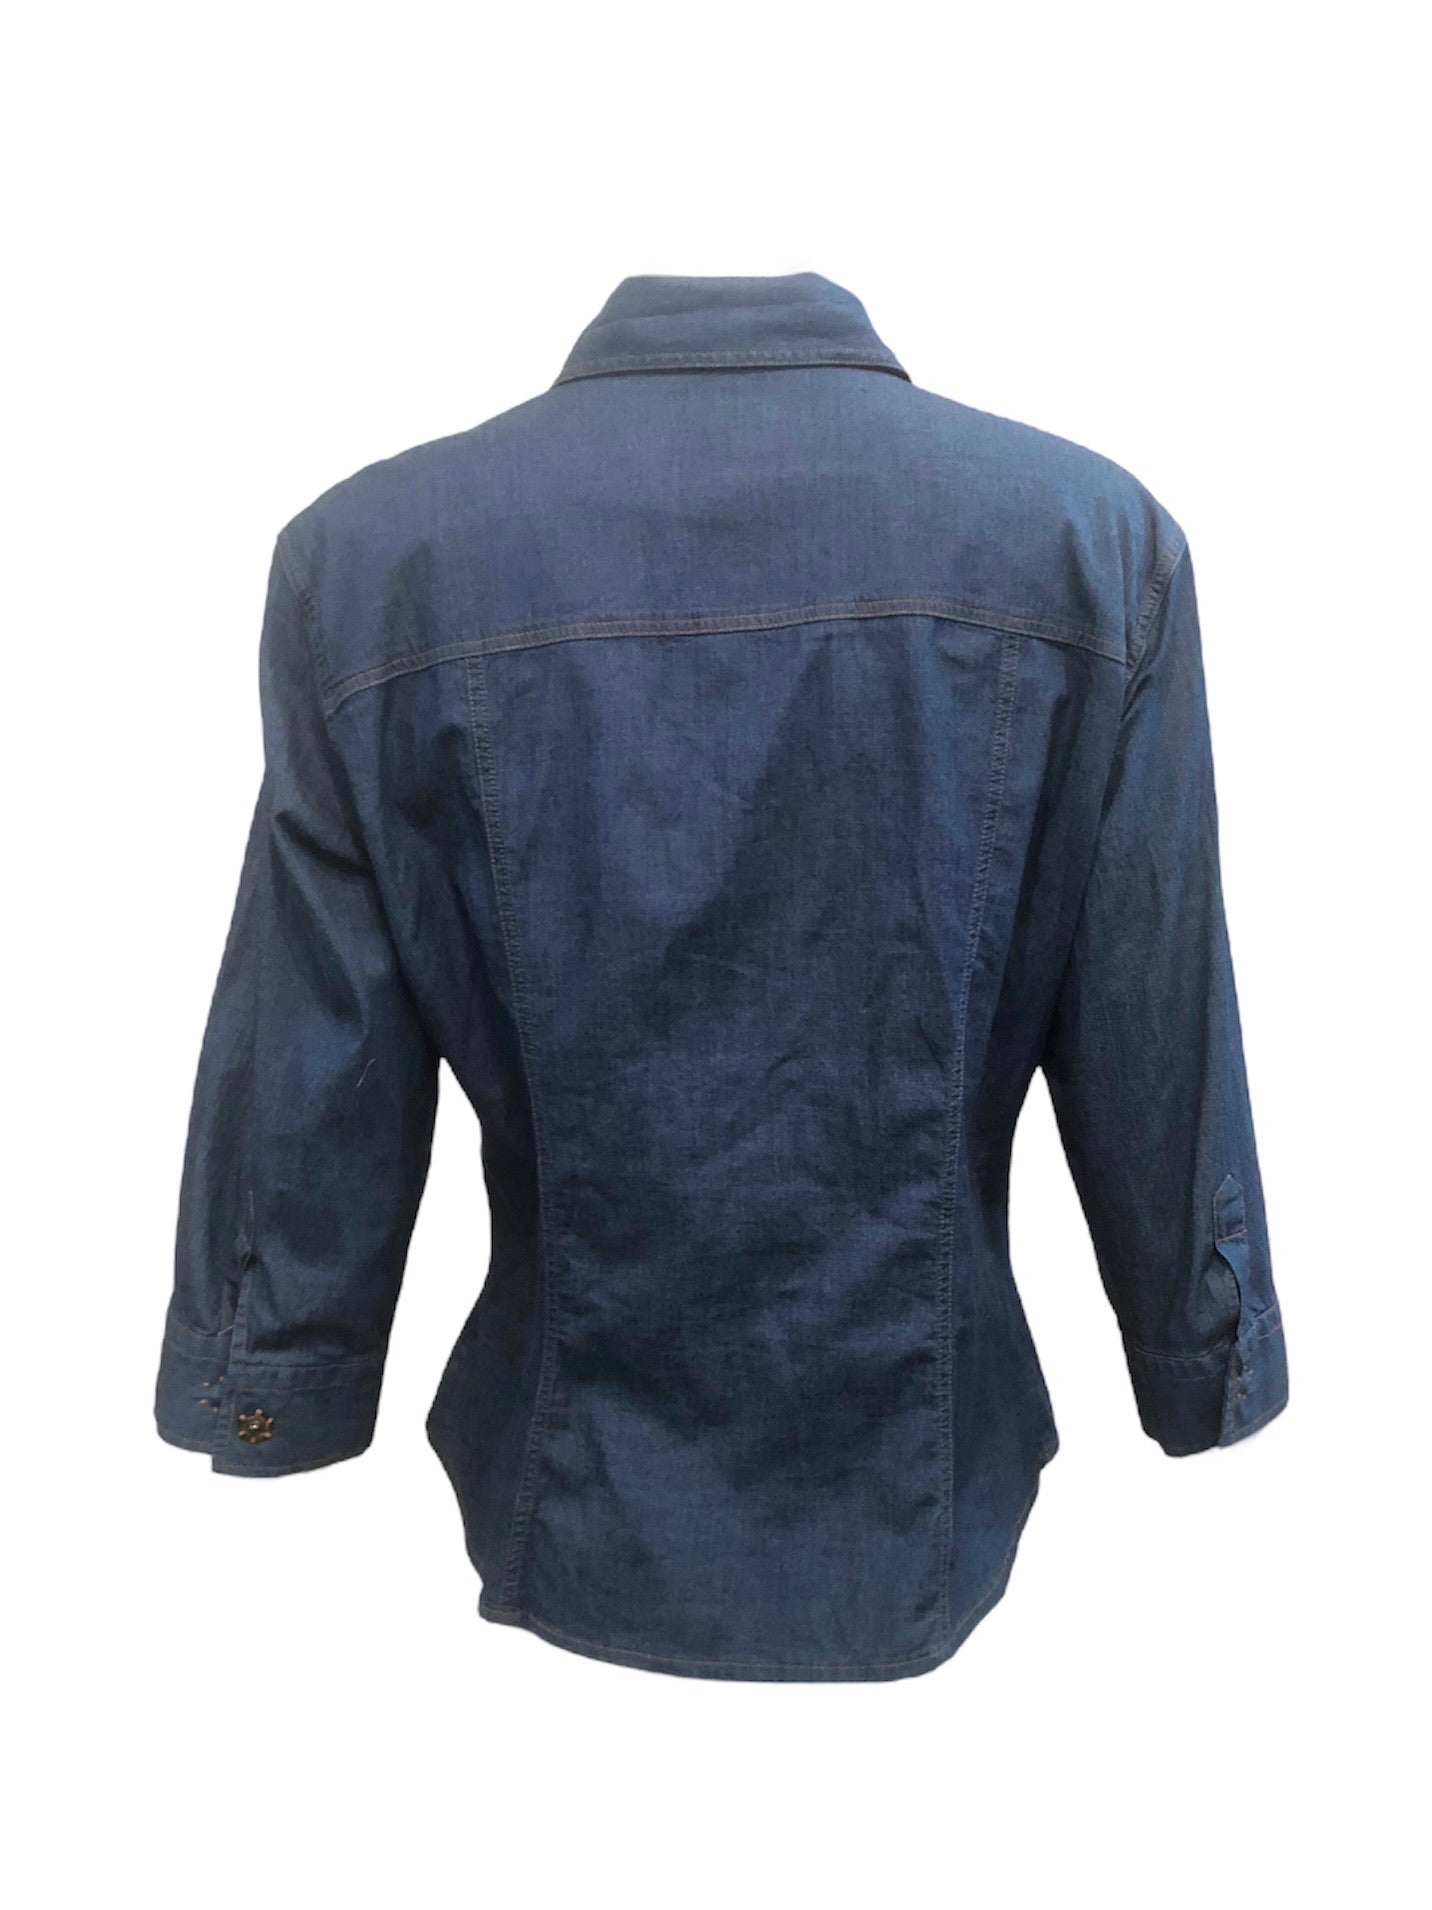 D&G Y2K Blue Denim Cropped Western Shirt BACK 2 of 4